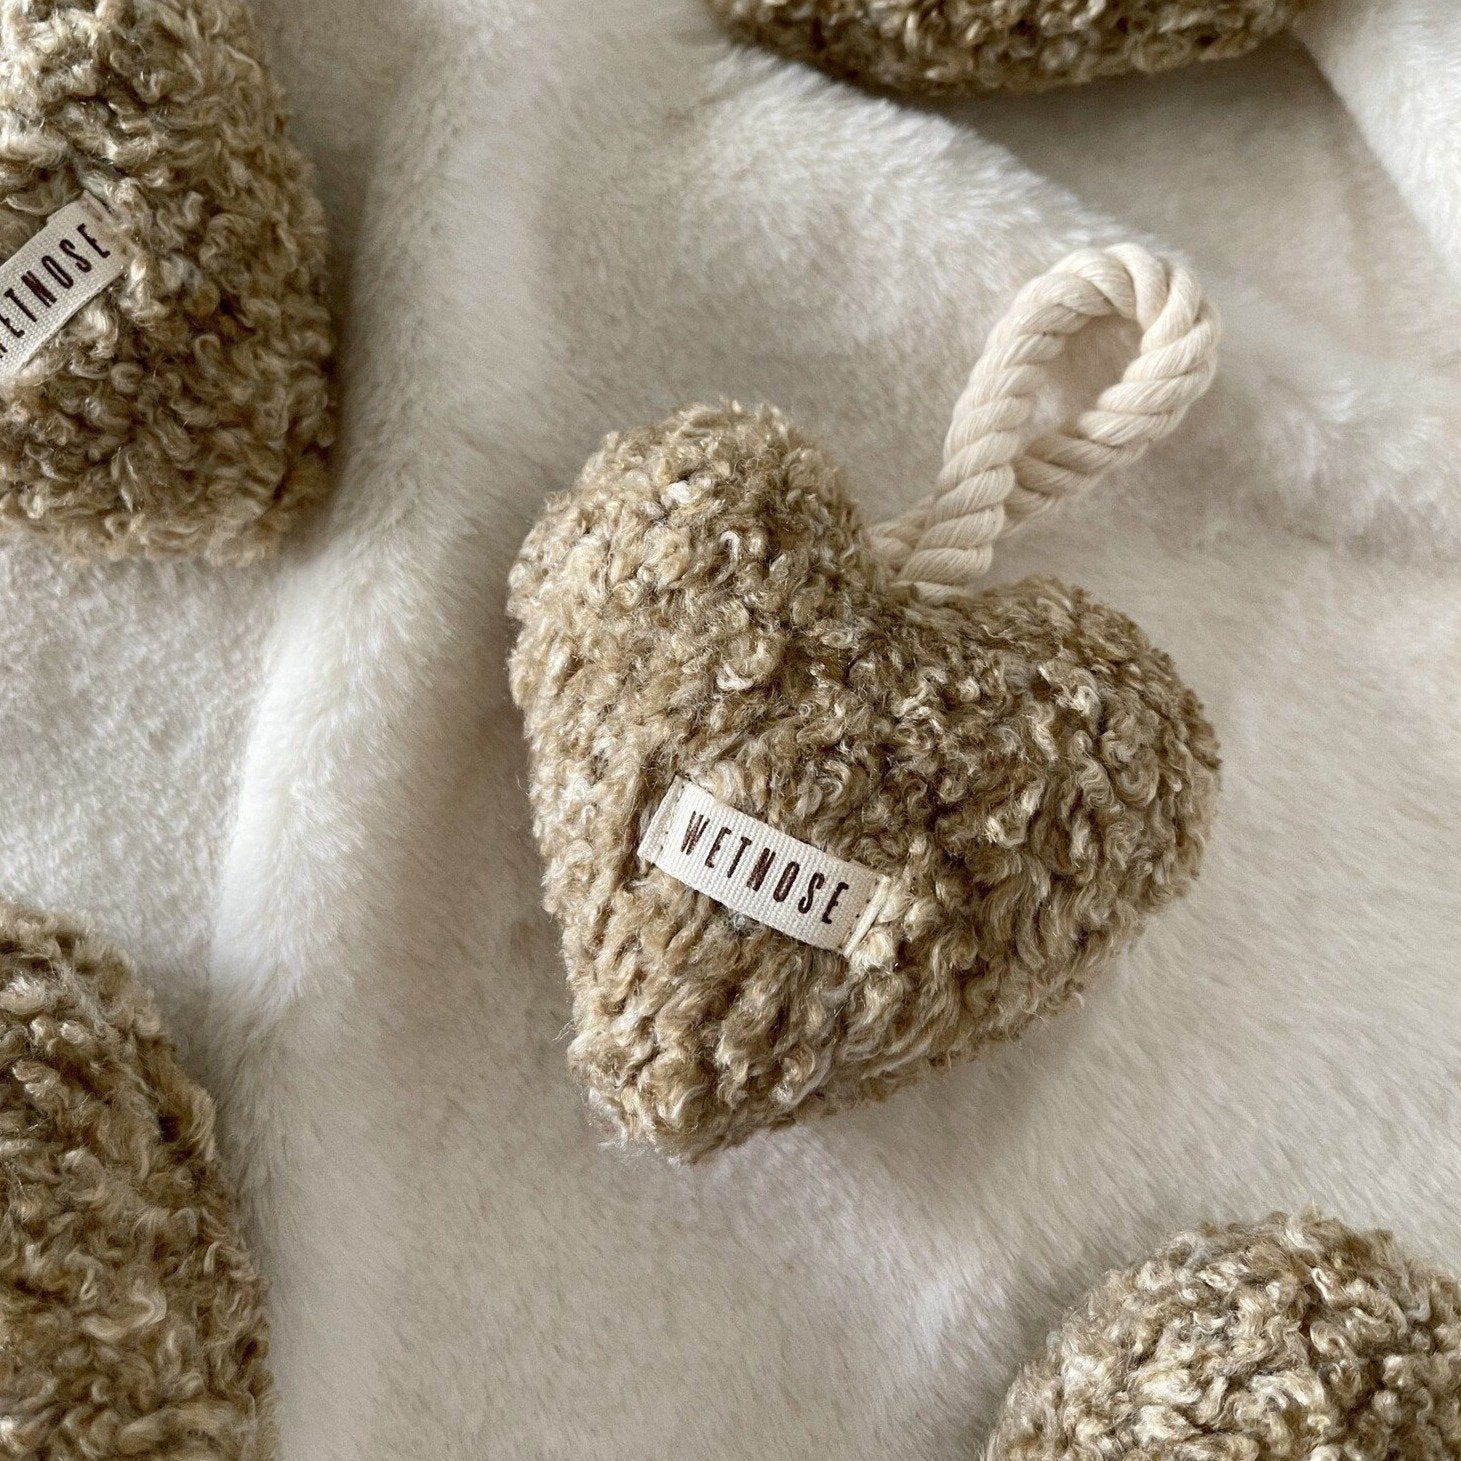 Wetnose Wool Heart Catnip Toy - CreatureLand